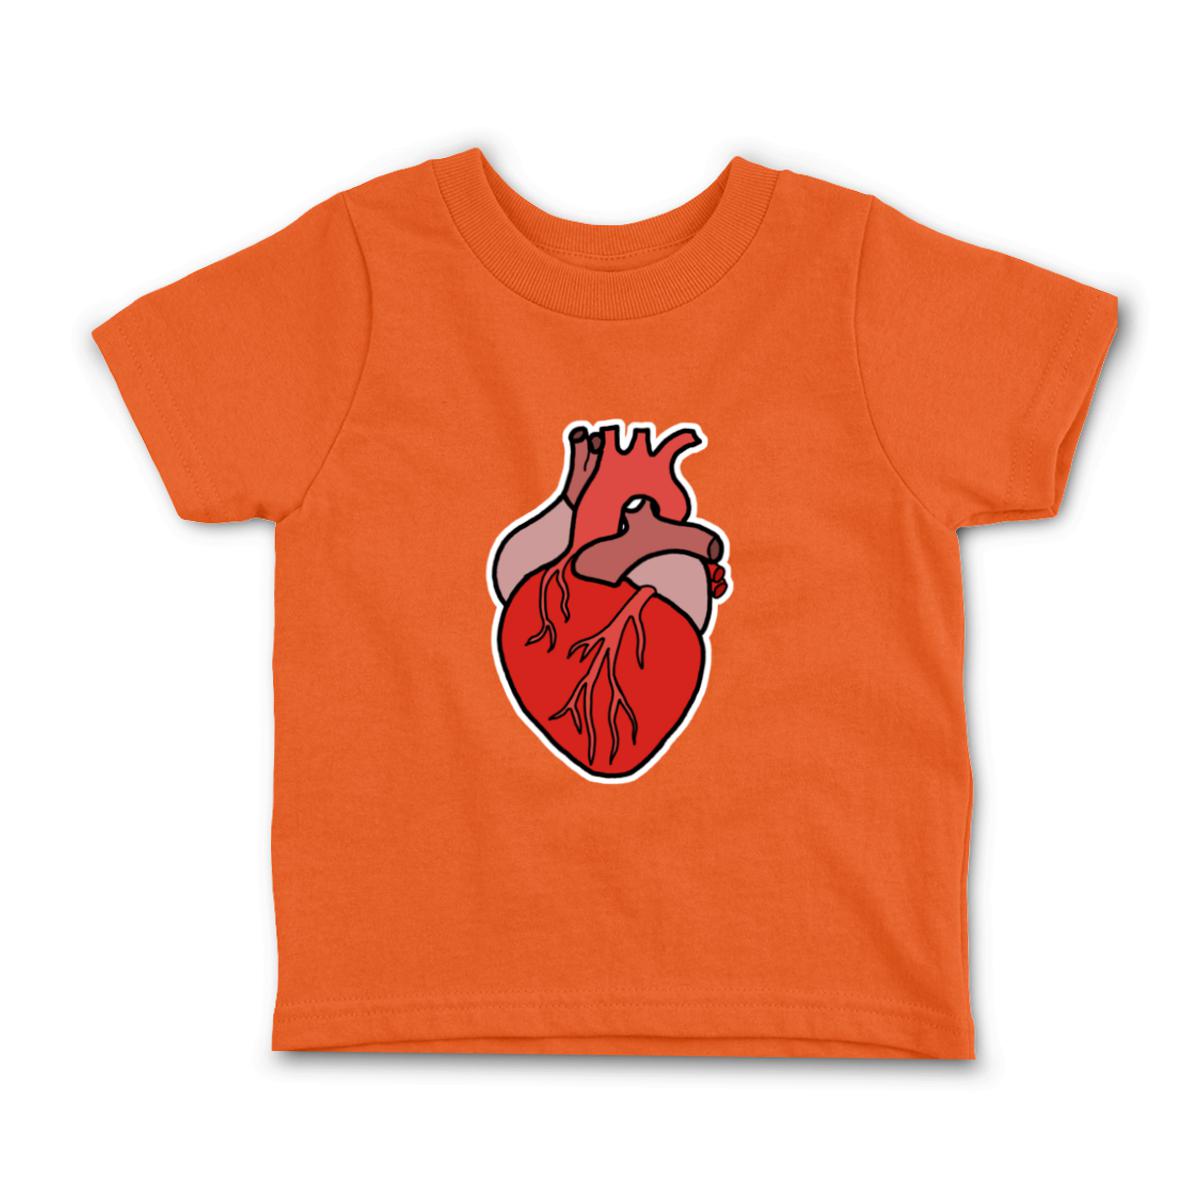 Illustrative Heart Infant Tee 18M orange